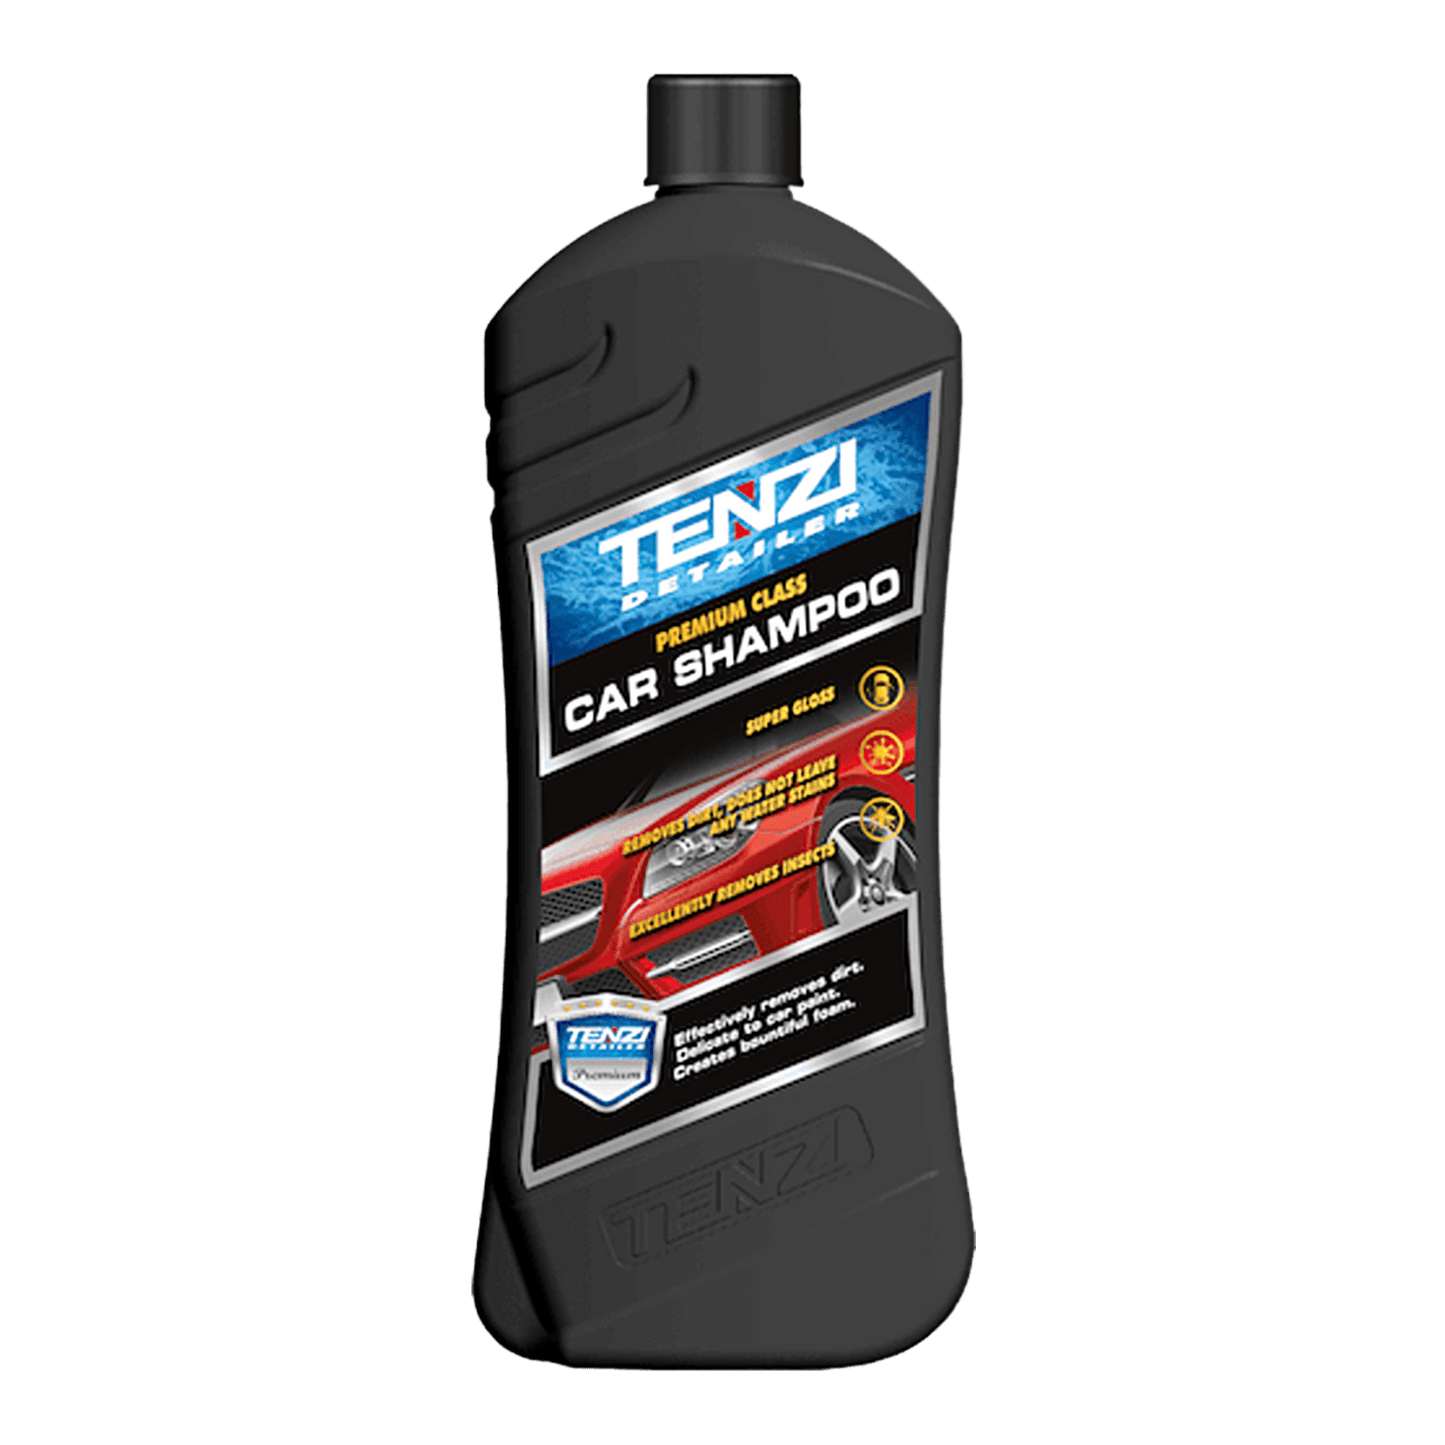 TENZI Car Shampoo